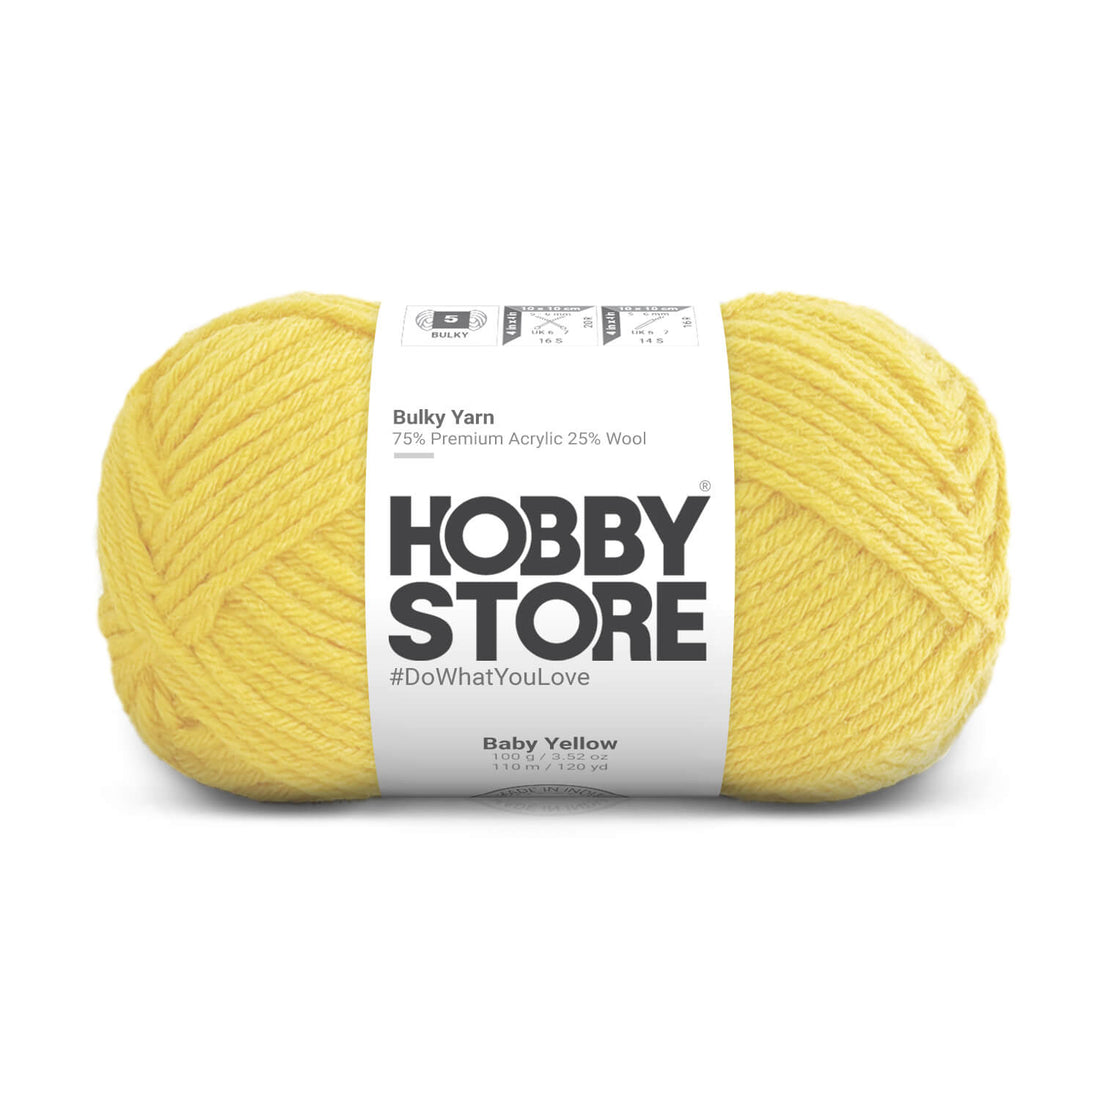 Bulky Yarn by Hobby Store - Baby Yellow 6039